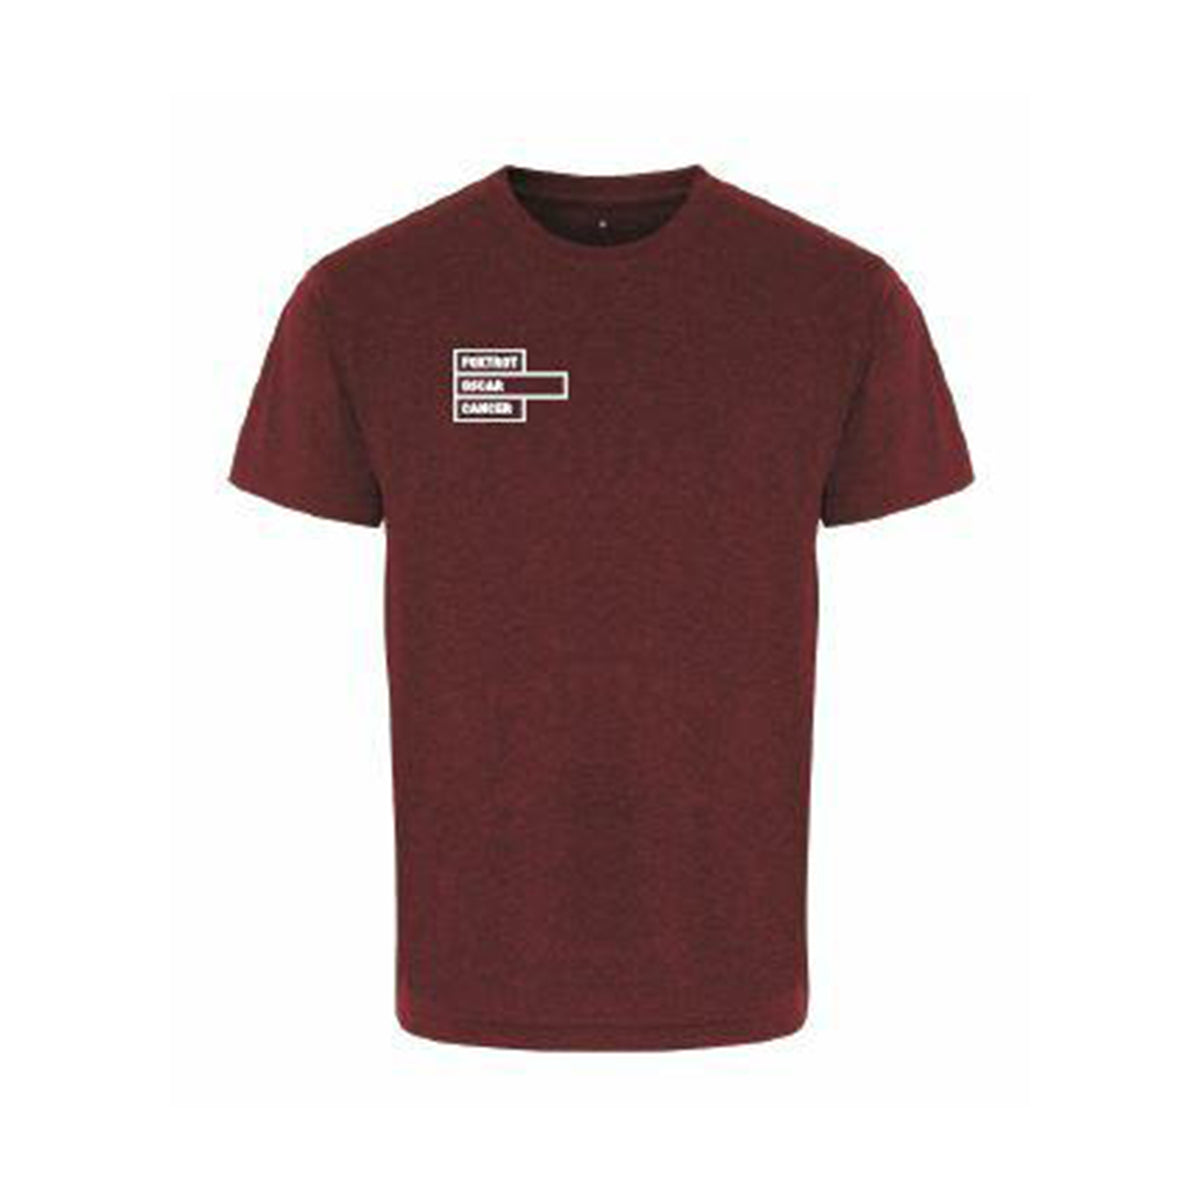 Foxtrot Oscar Gym T-Shirt: Burgundy